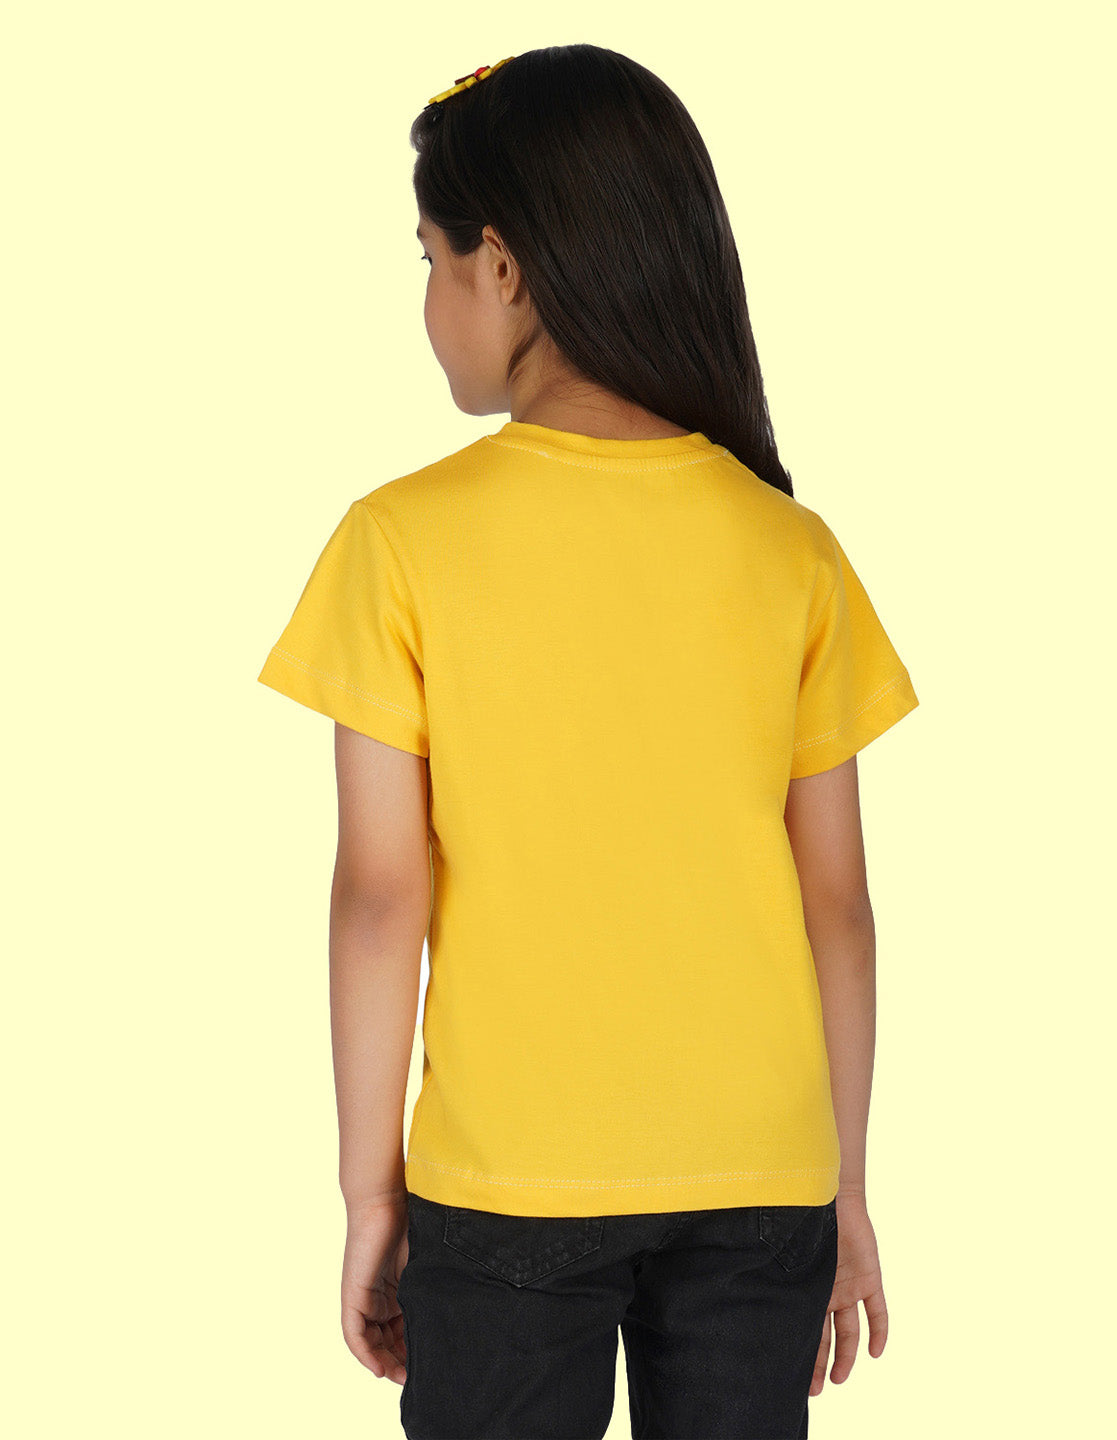 Nusyl Girls Half Sleeves Yellow Teddy bear printed T-shirt